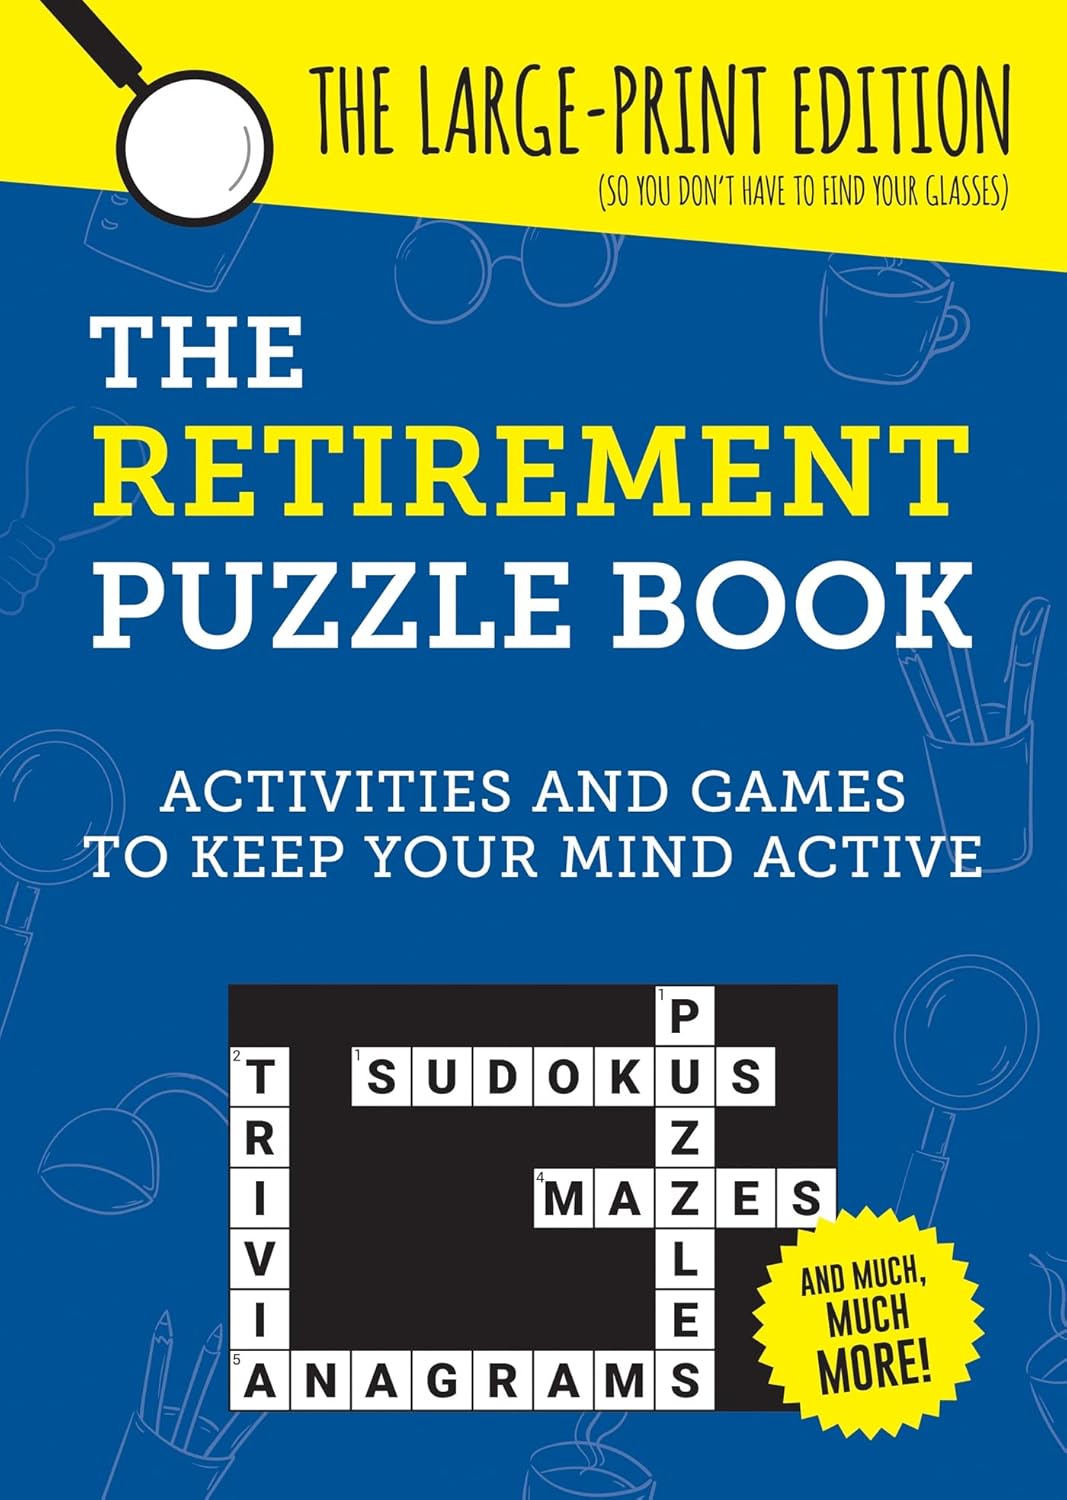 The Retirement Buzzle Book